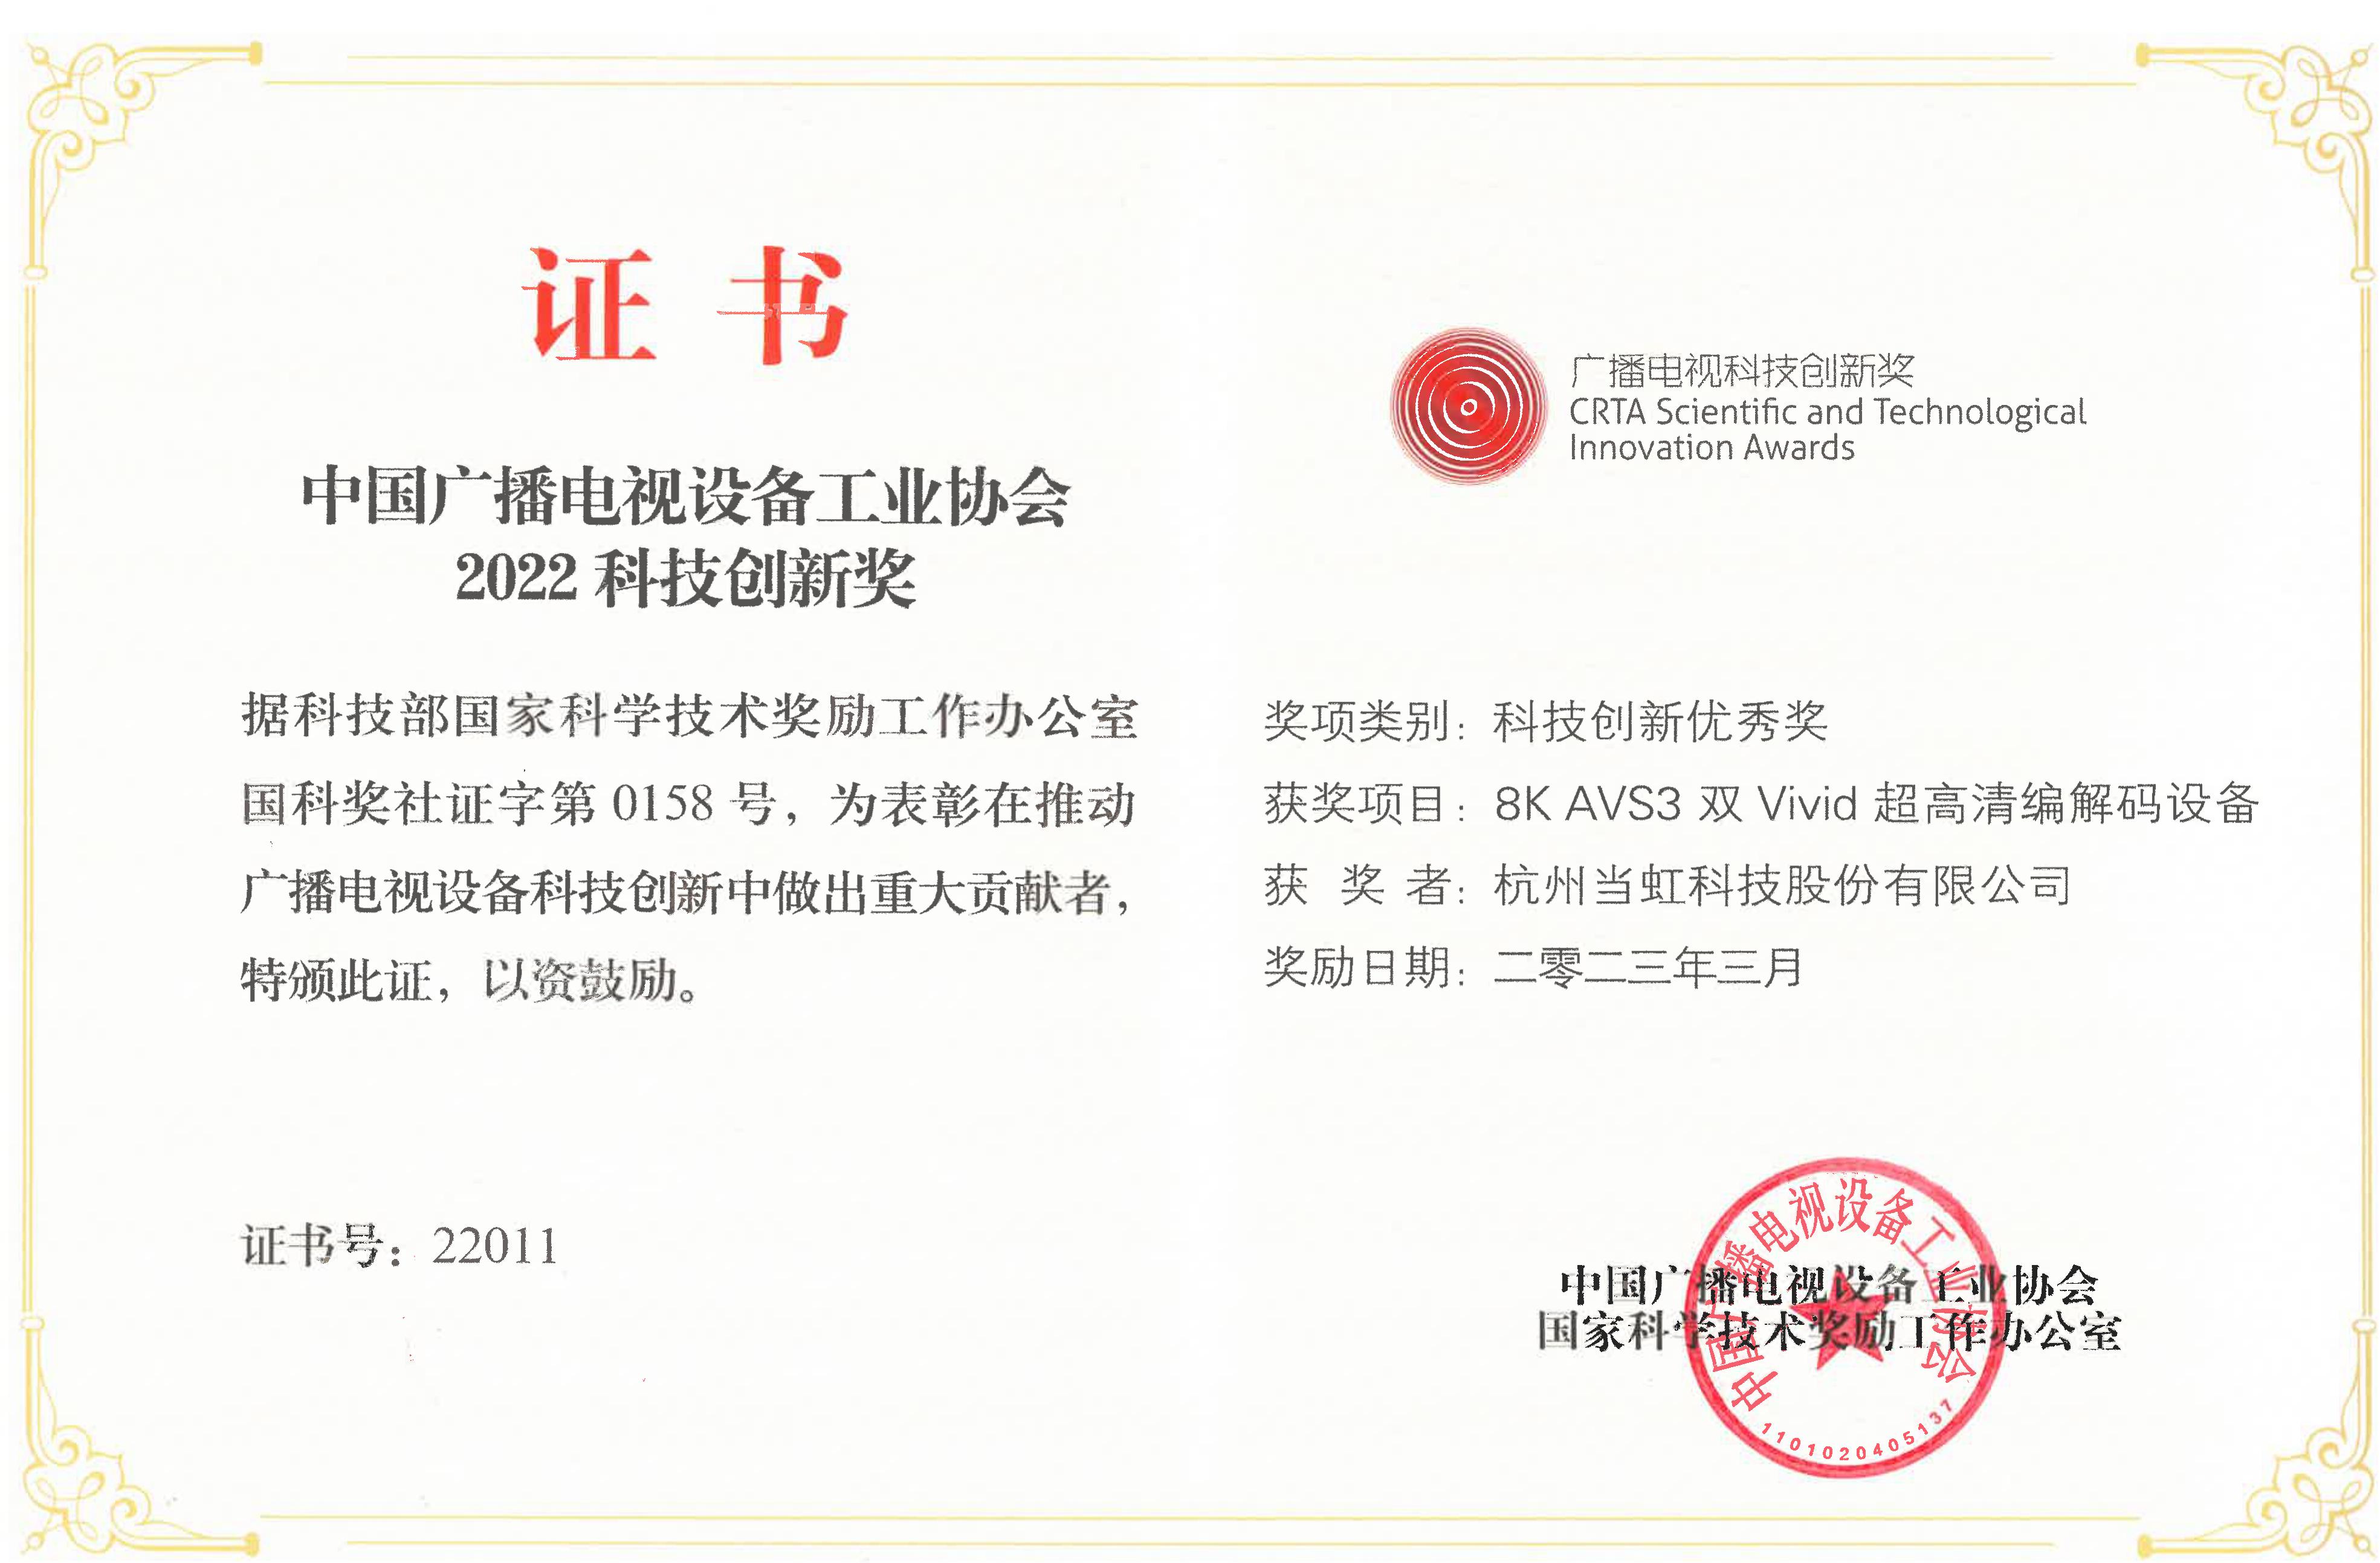 2023-8K AVS3 双Vivid超高清编码设备-科技创新奖-证书-中国广播电视装备工业协会.jpg